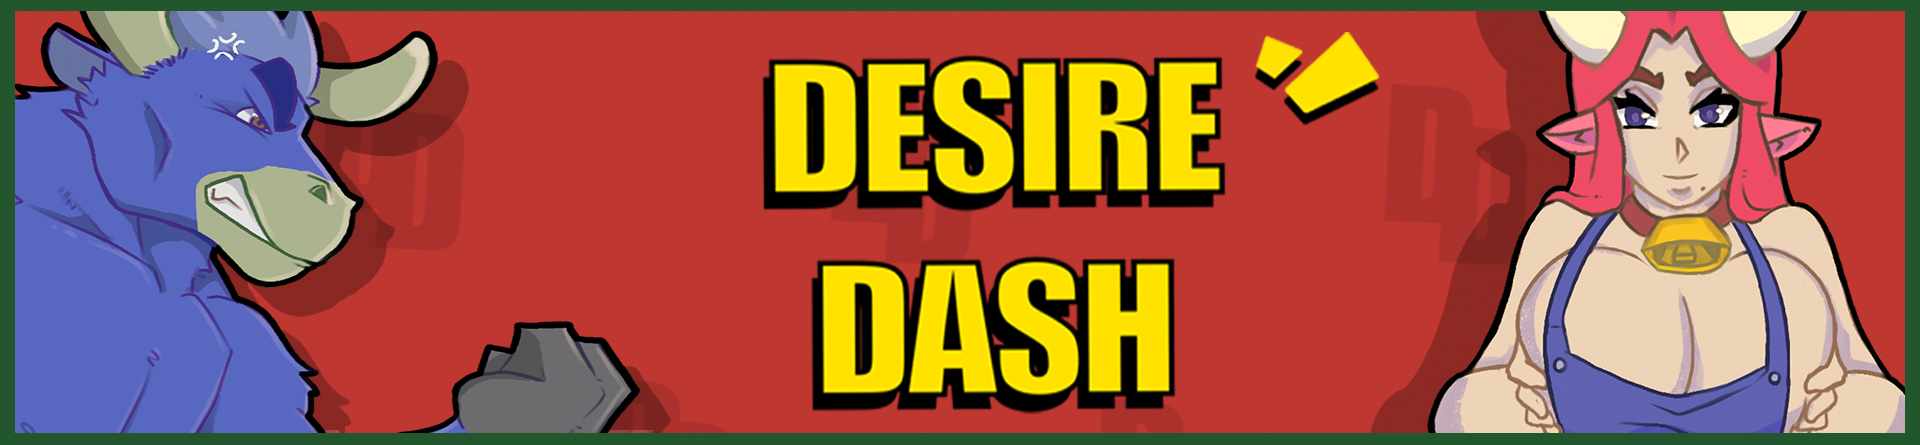 Desire Dash